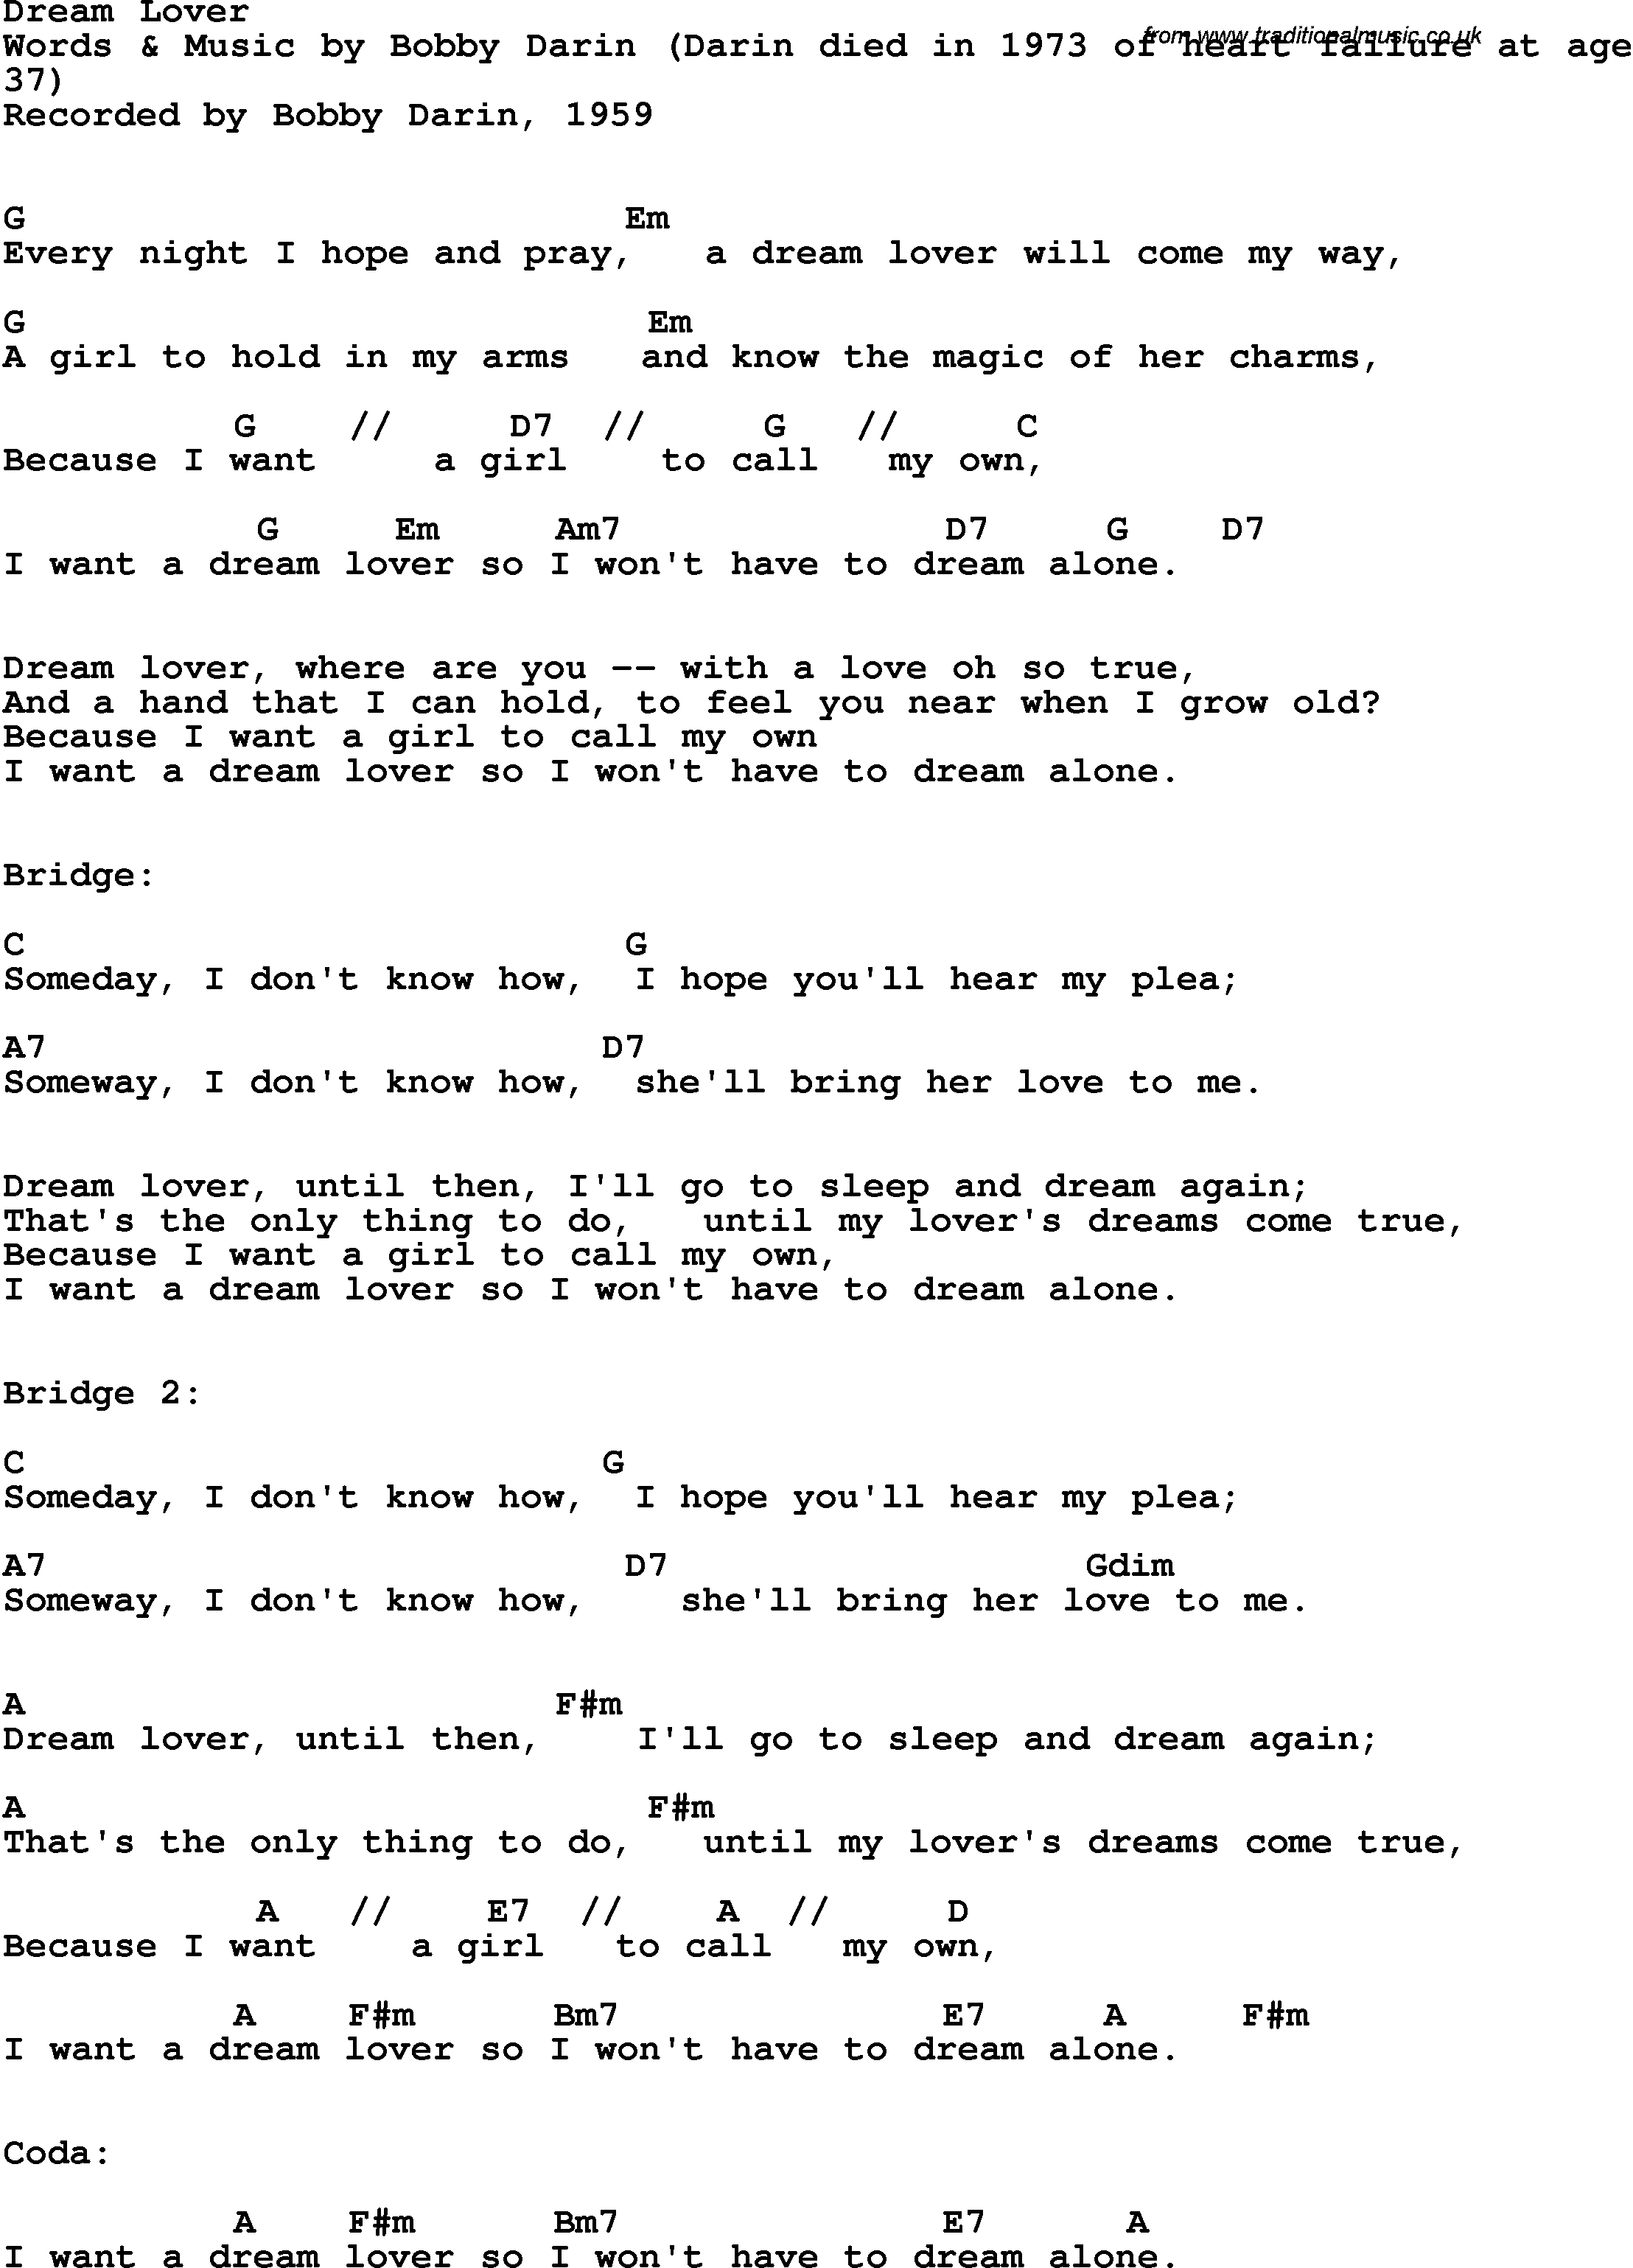 Song Lyrics with guitar chords for Dream Lover - Bobby Darin, 1959